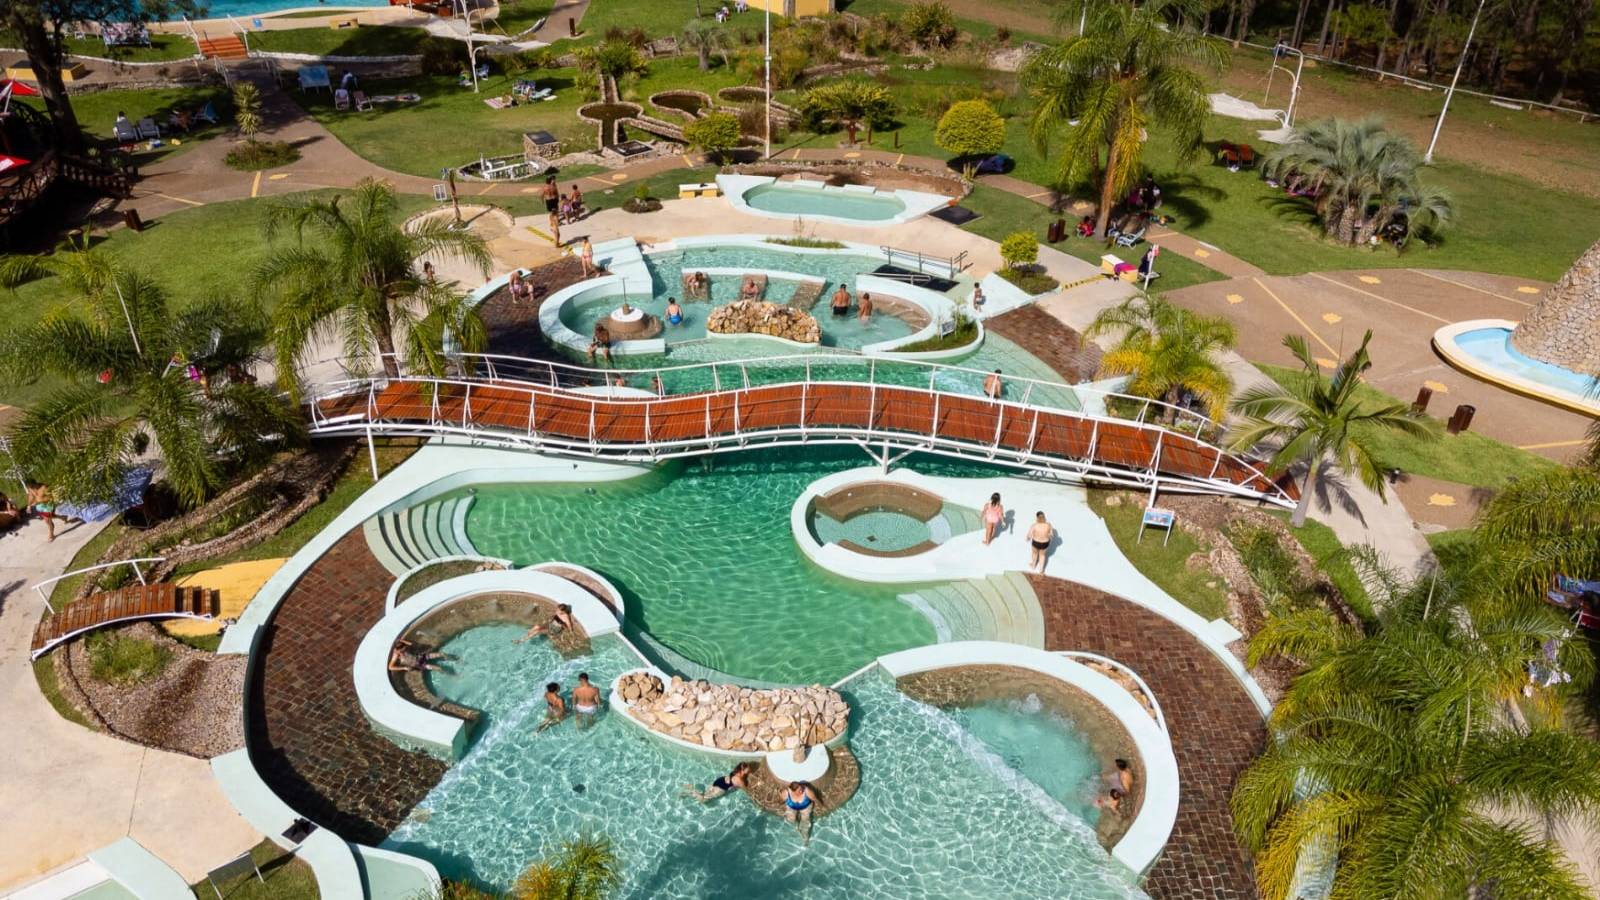 Del Ayui Hot Springs Acuatic Park and Punta Viracho Hot Springs